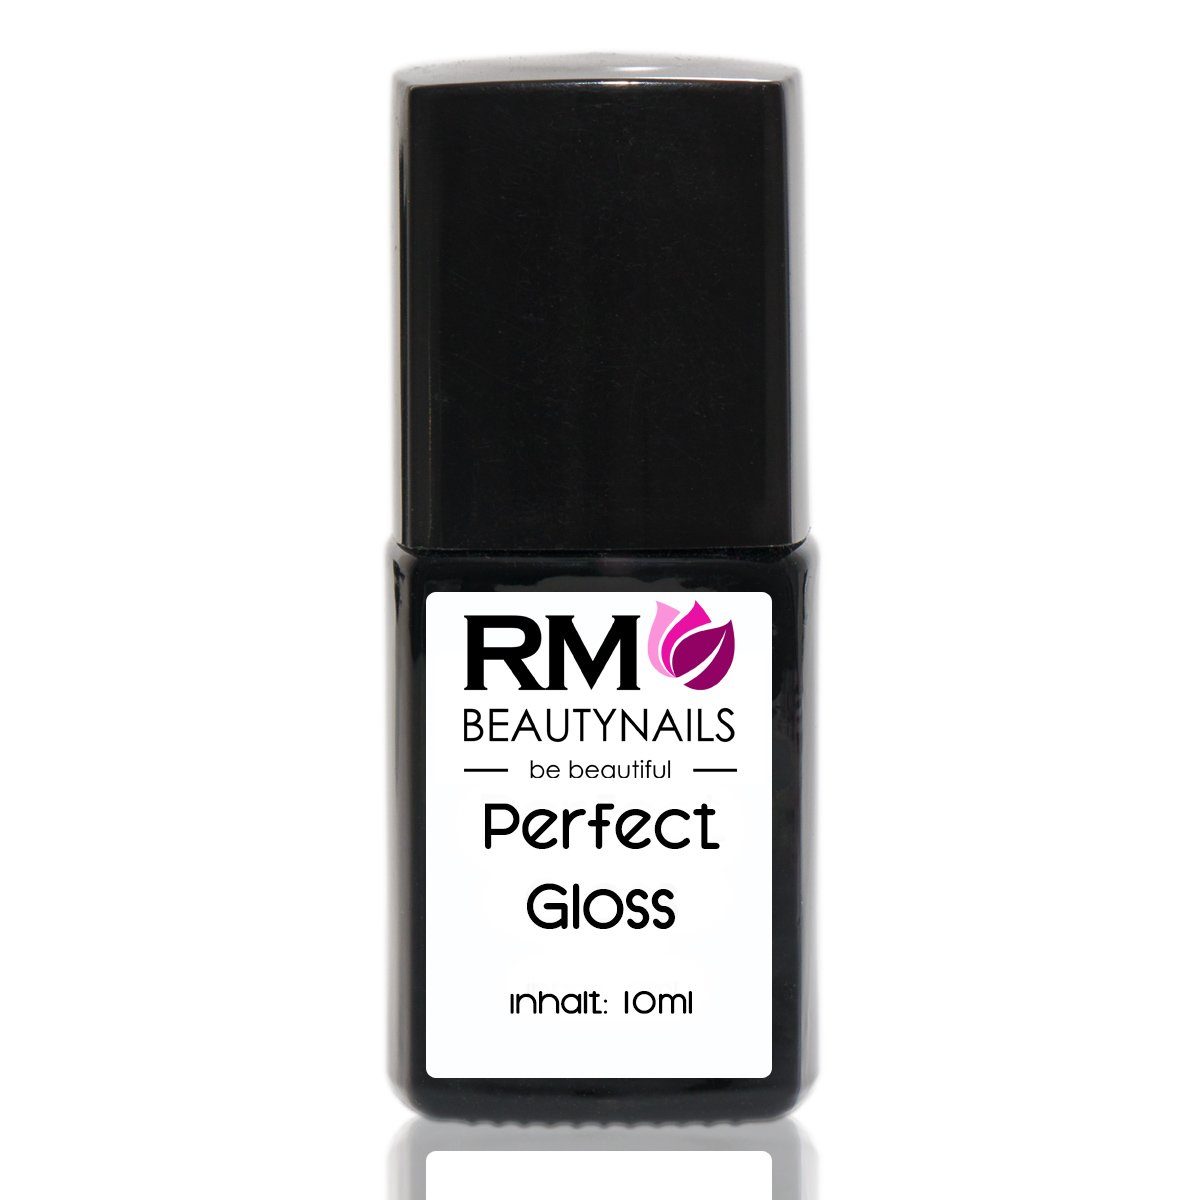 RM Beautynails UV-Gel Perfect Gloss Glanz UV-Gel Led Nagelgel Quickfinish Finishgel, vegan